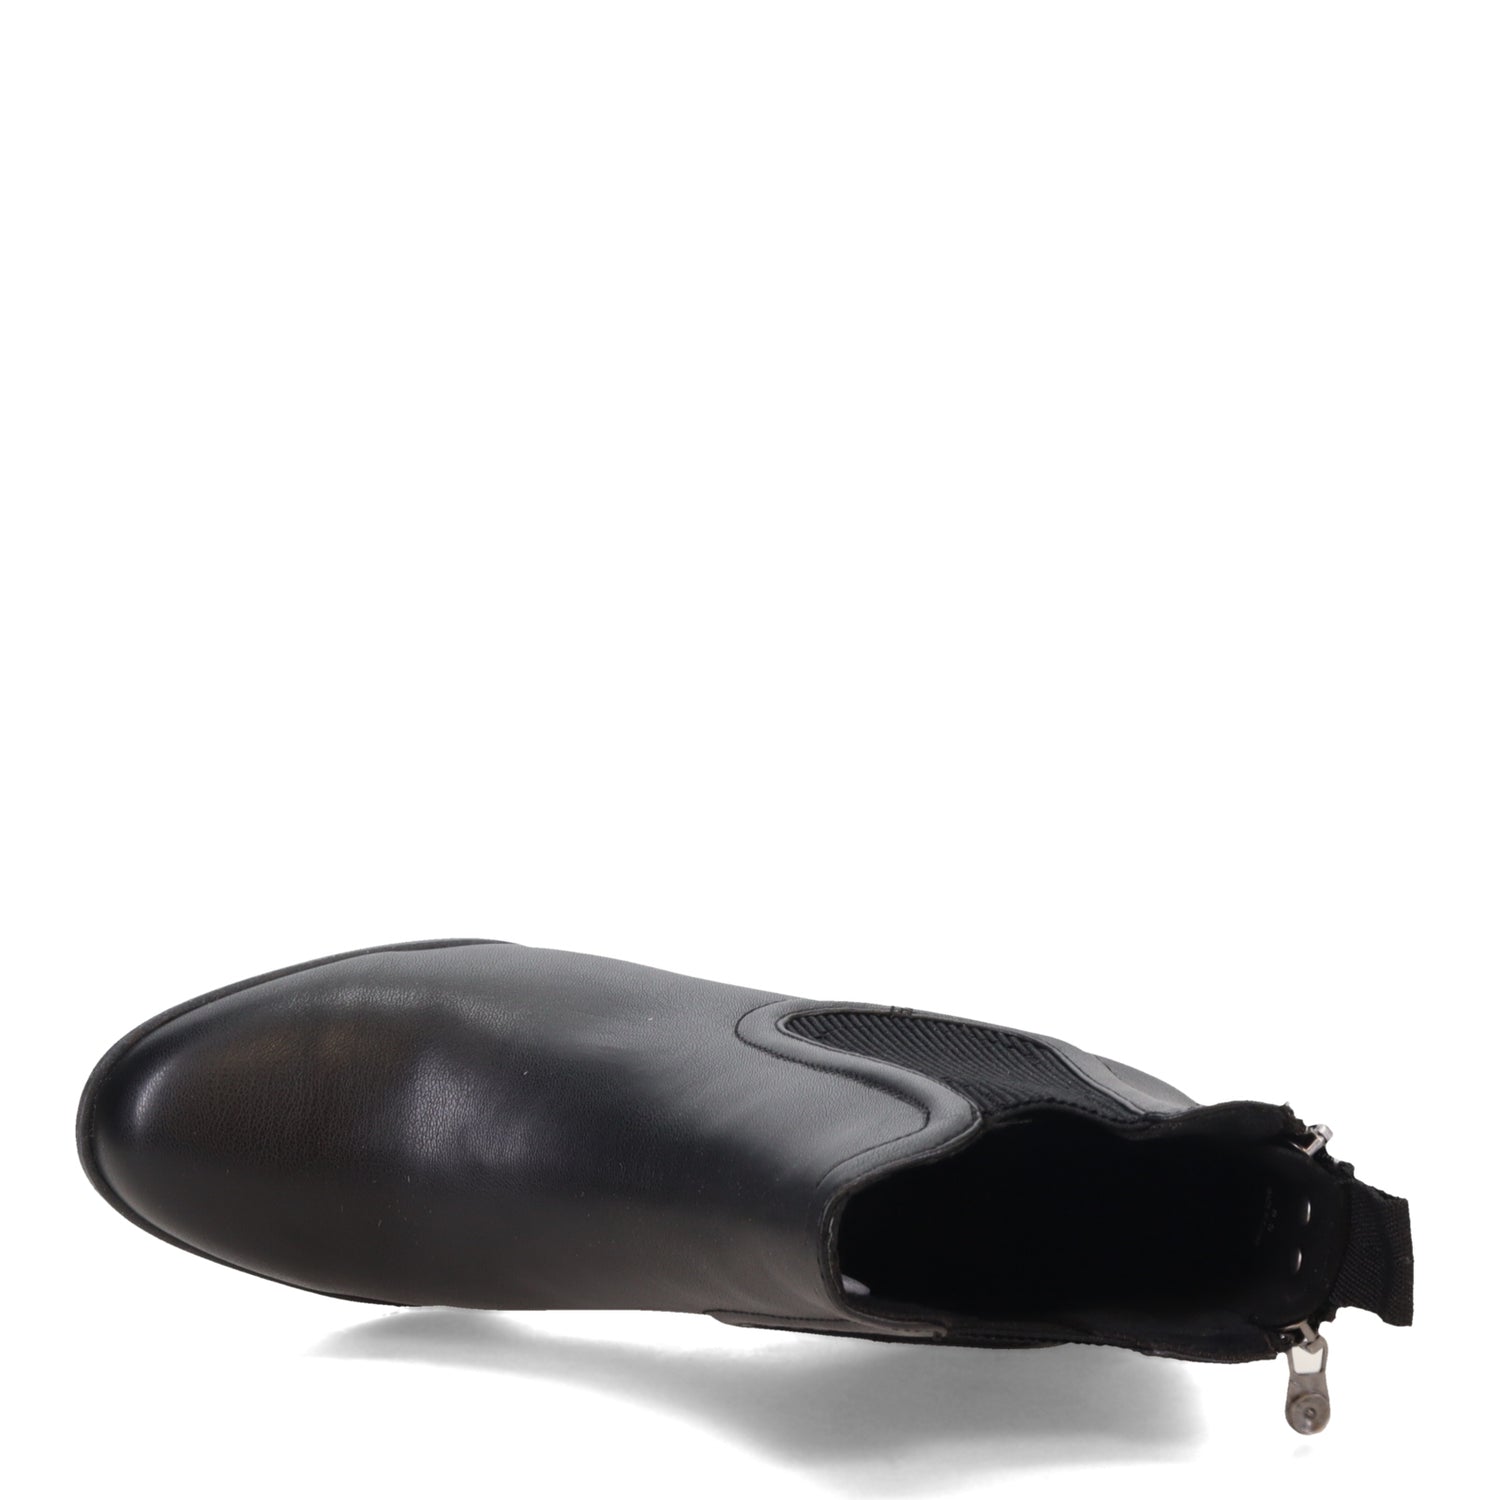 Peltz Shoes  Women's Blowfish Malibu Praline Boot BLACK BF-10257-057